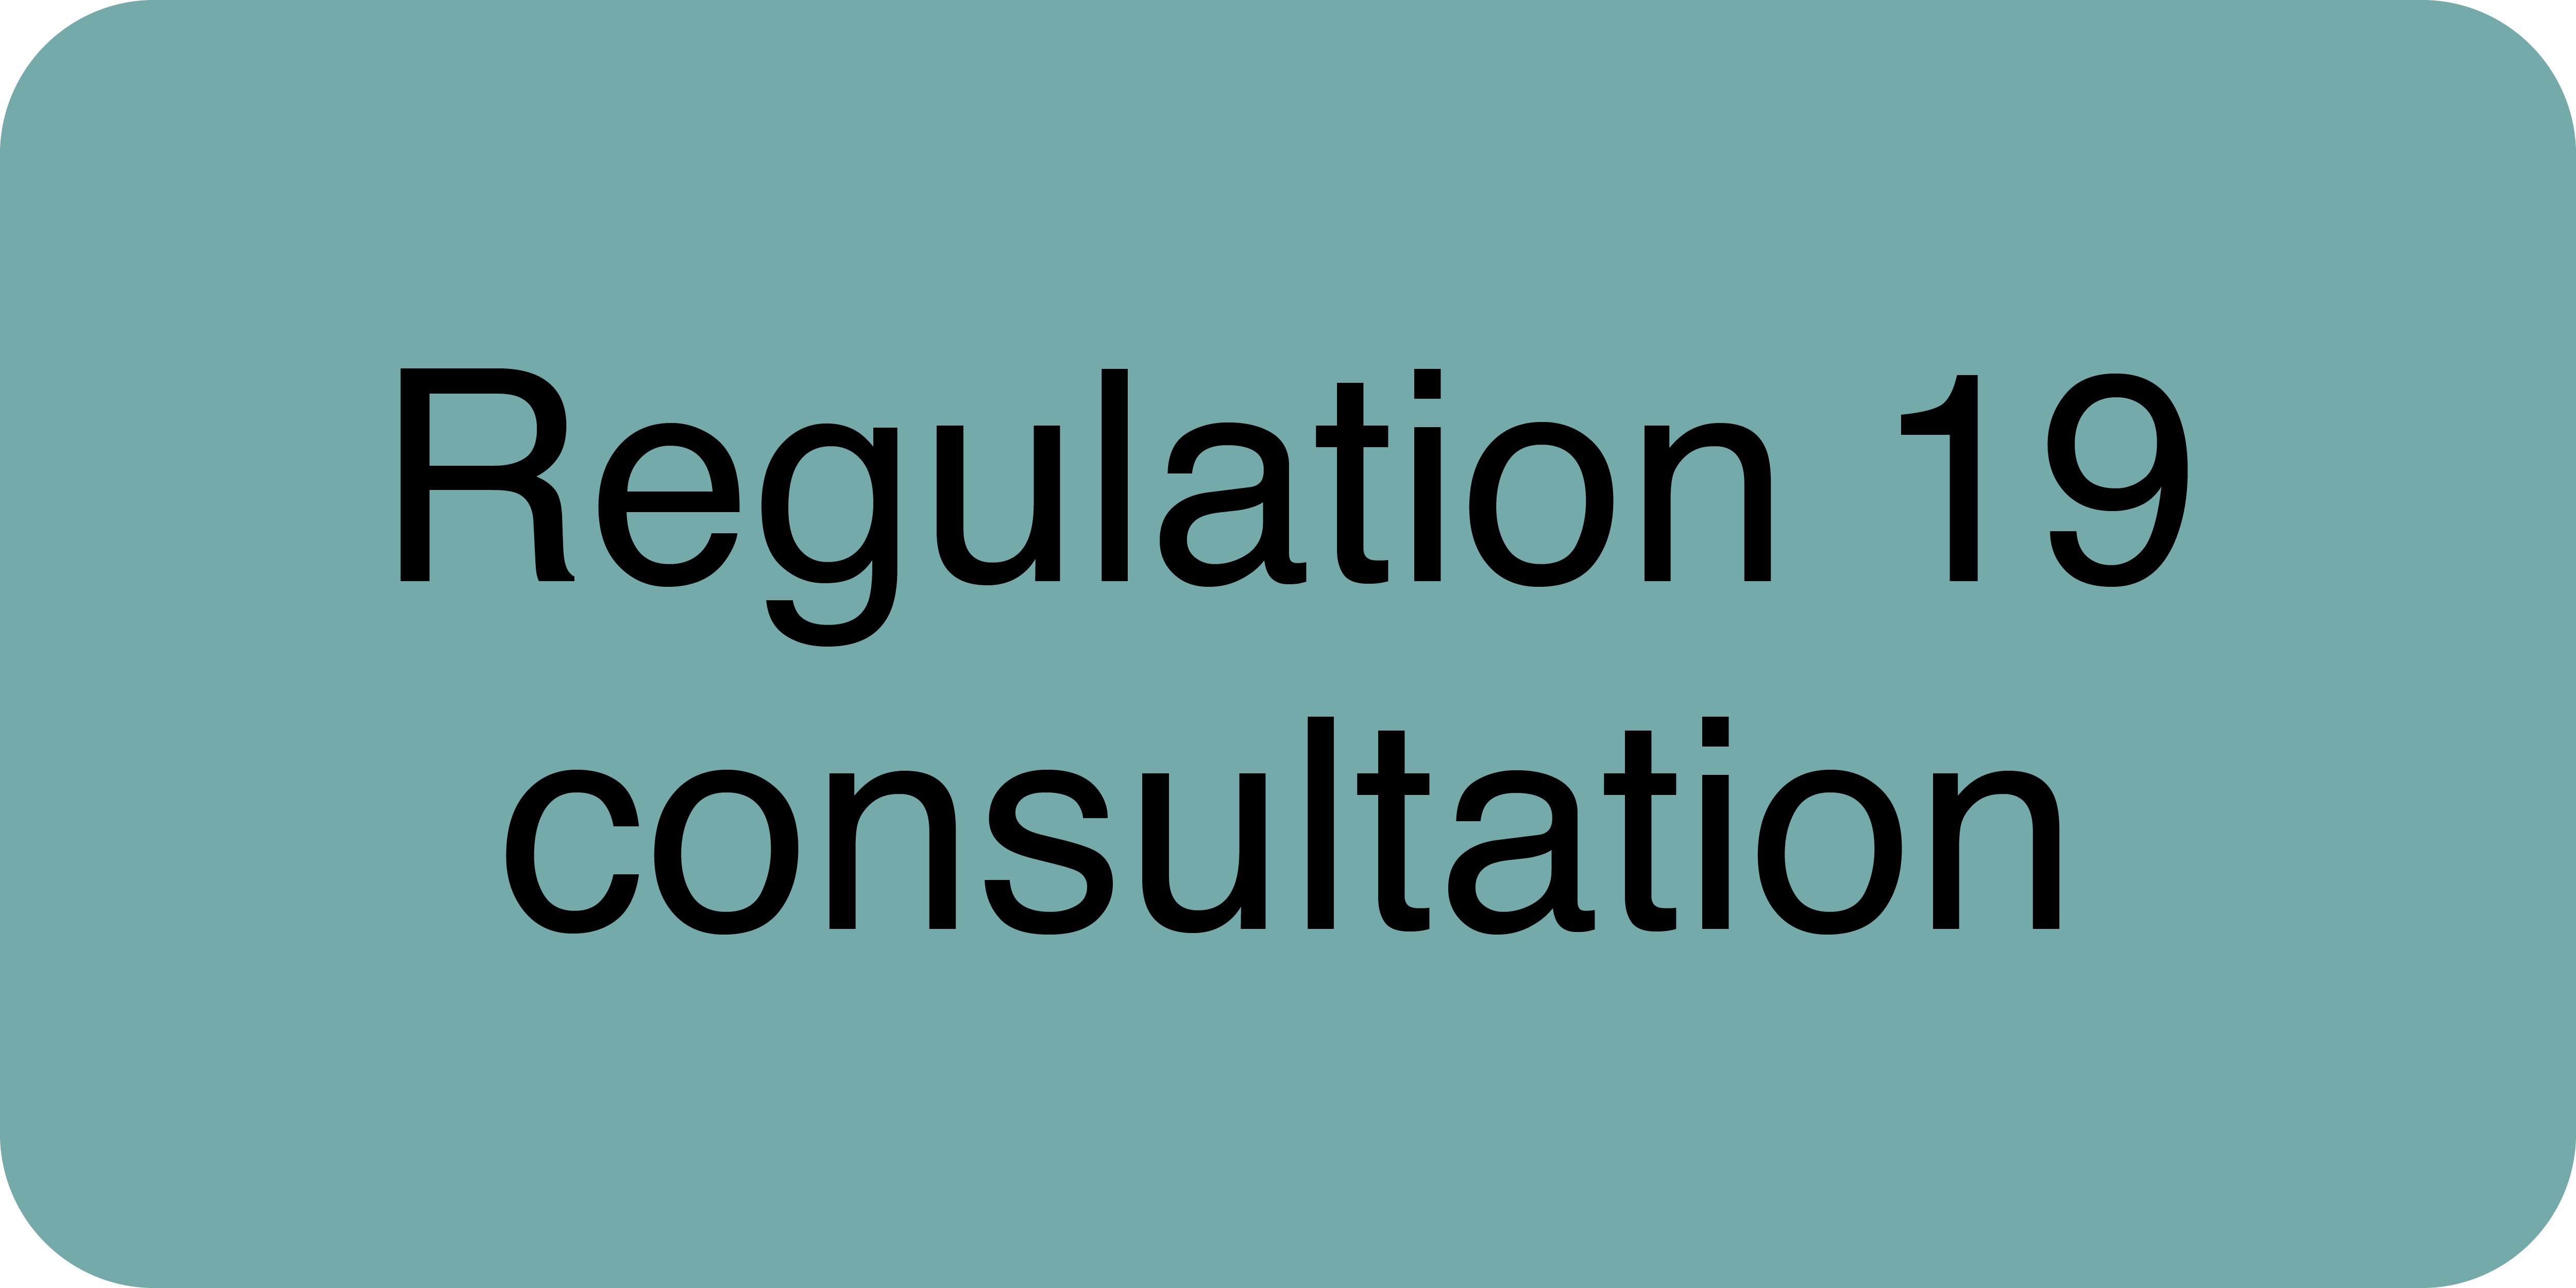 Regulation 19 consultation